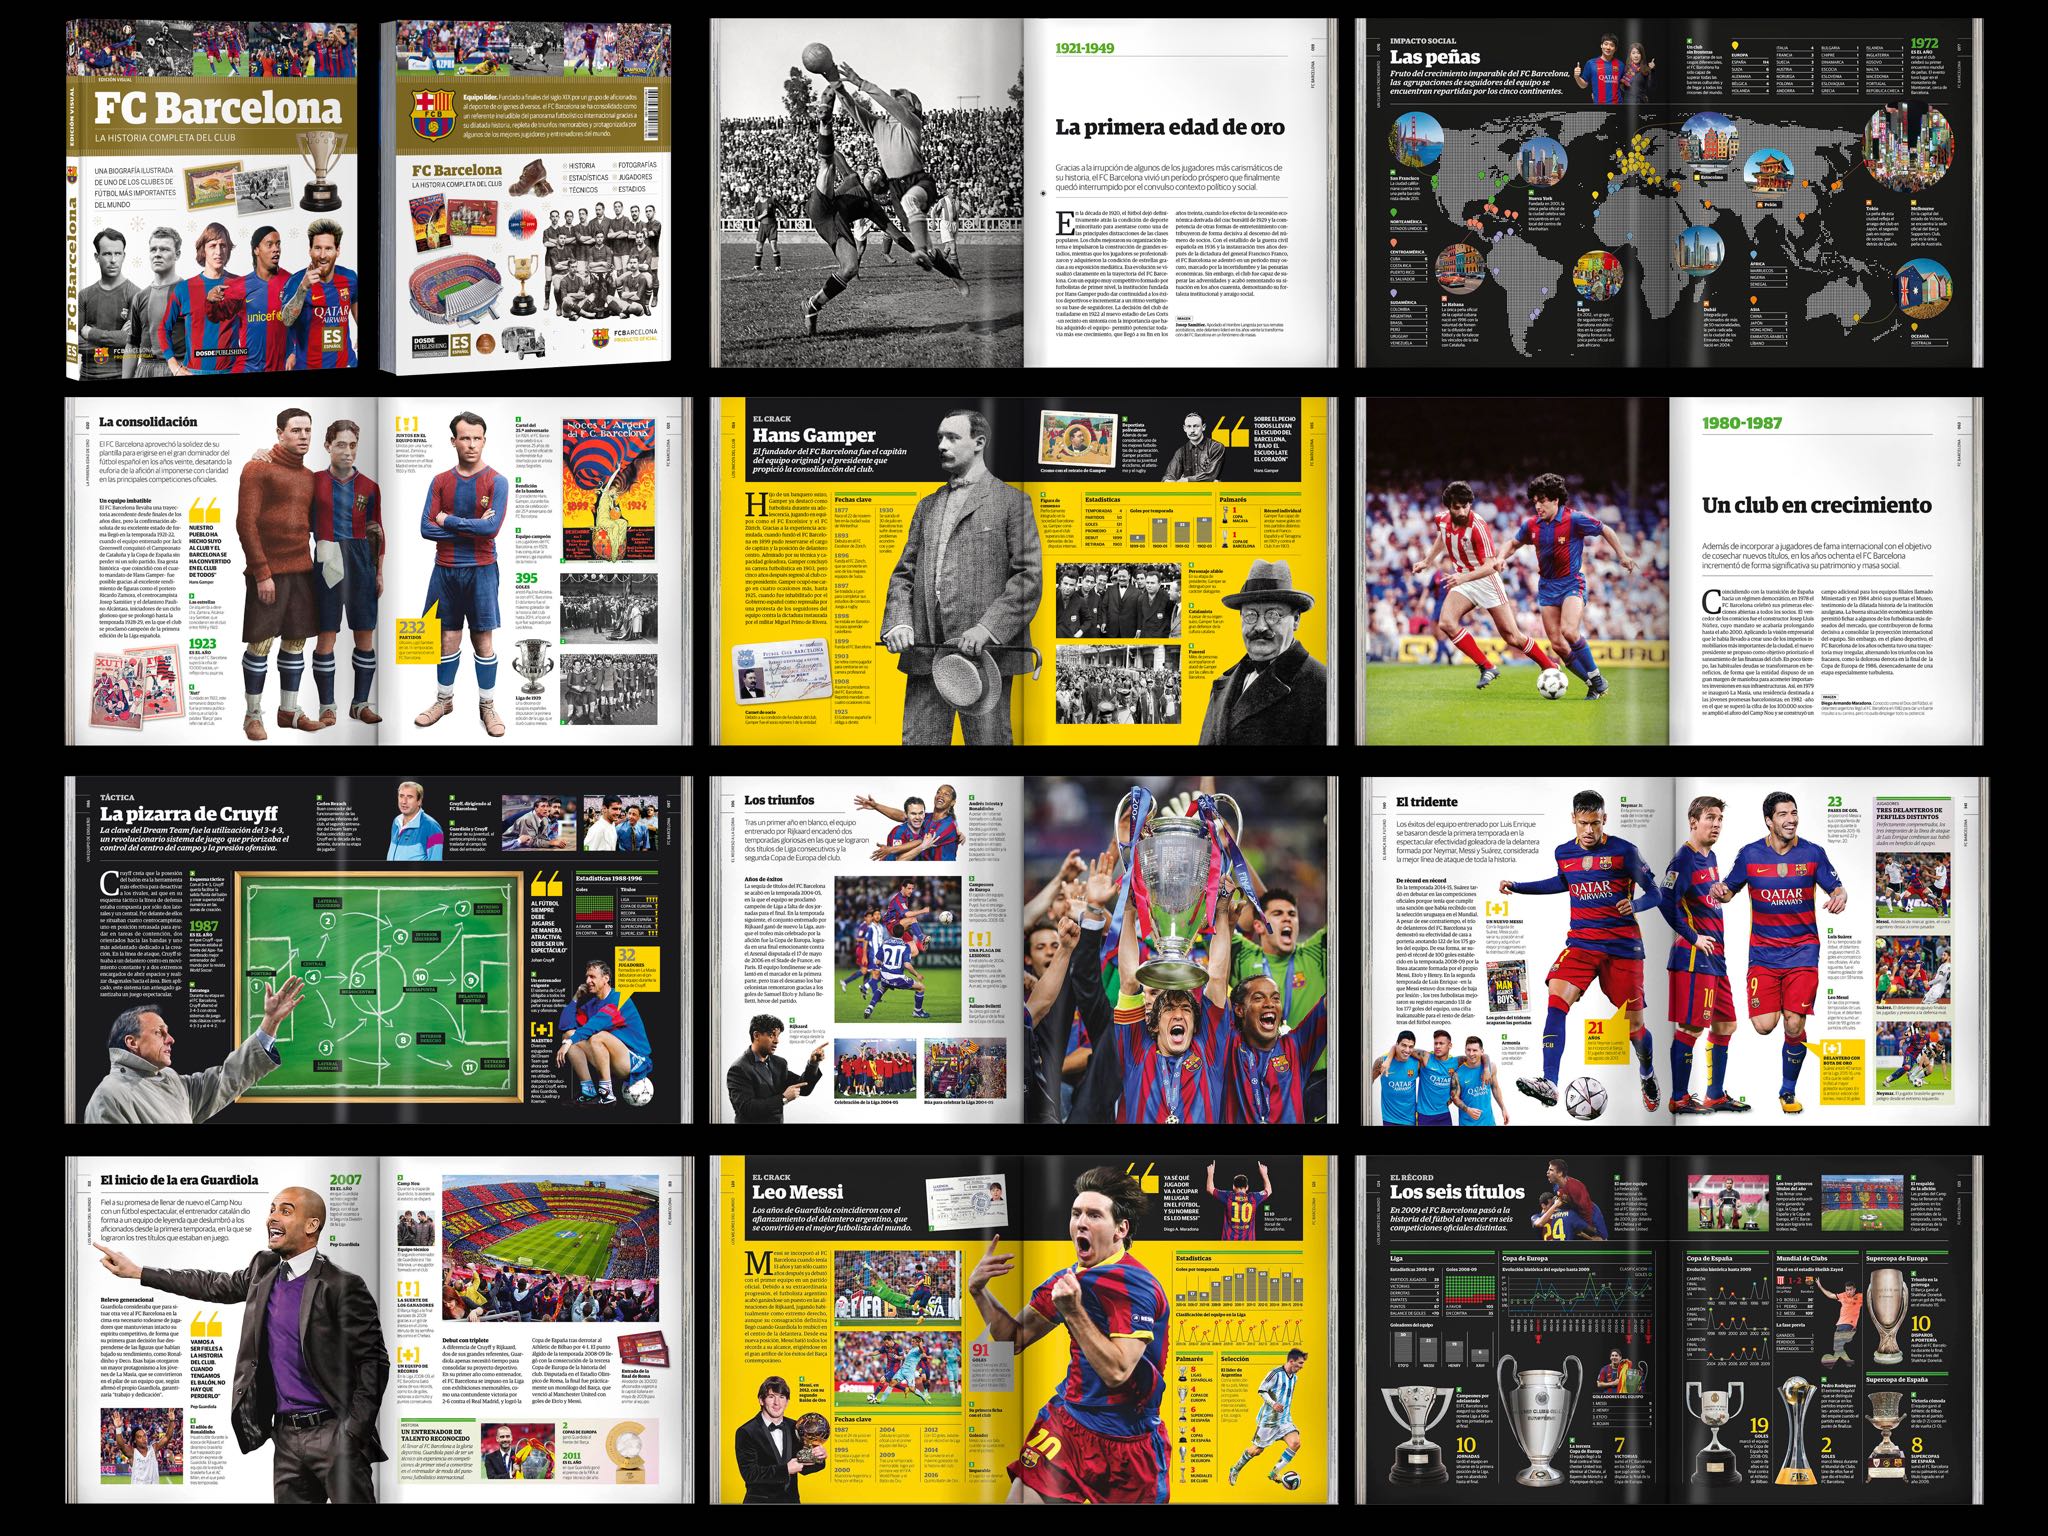 FC Barcelona, La historia completa del club